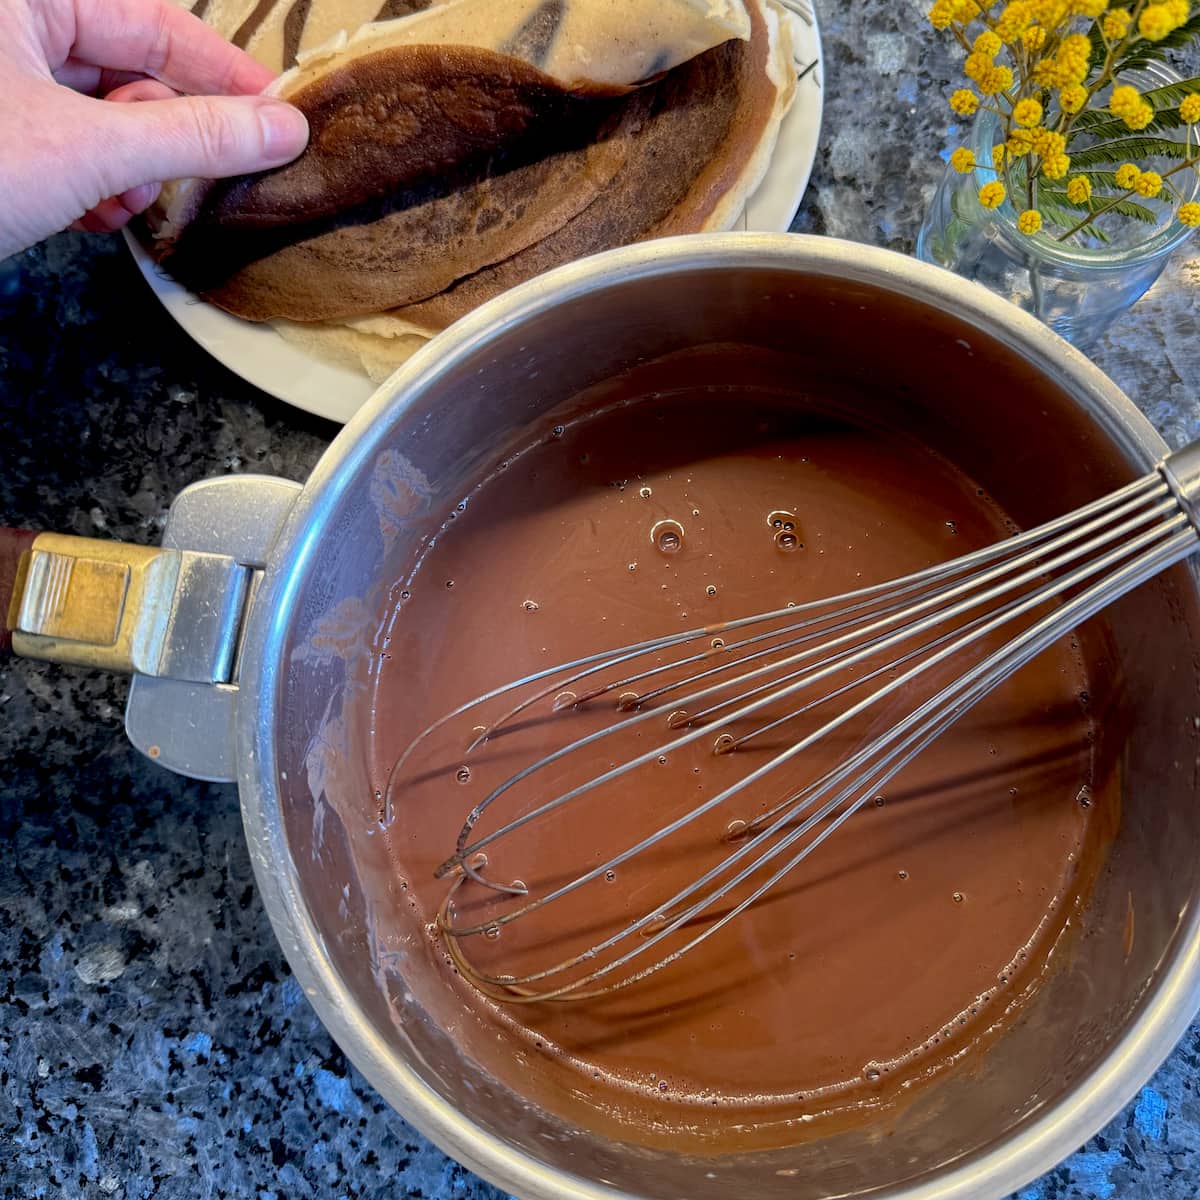 Chocolate Sauce Recipe